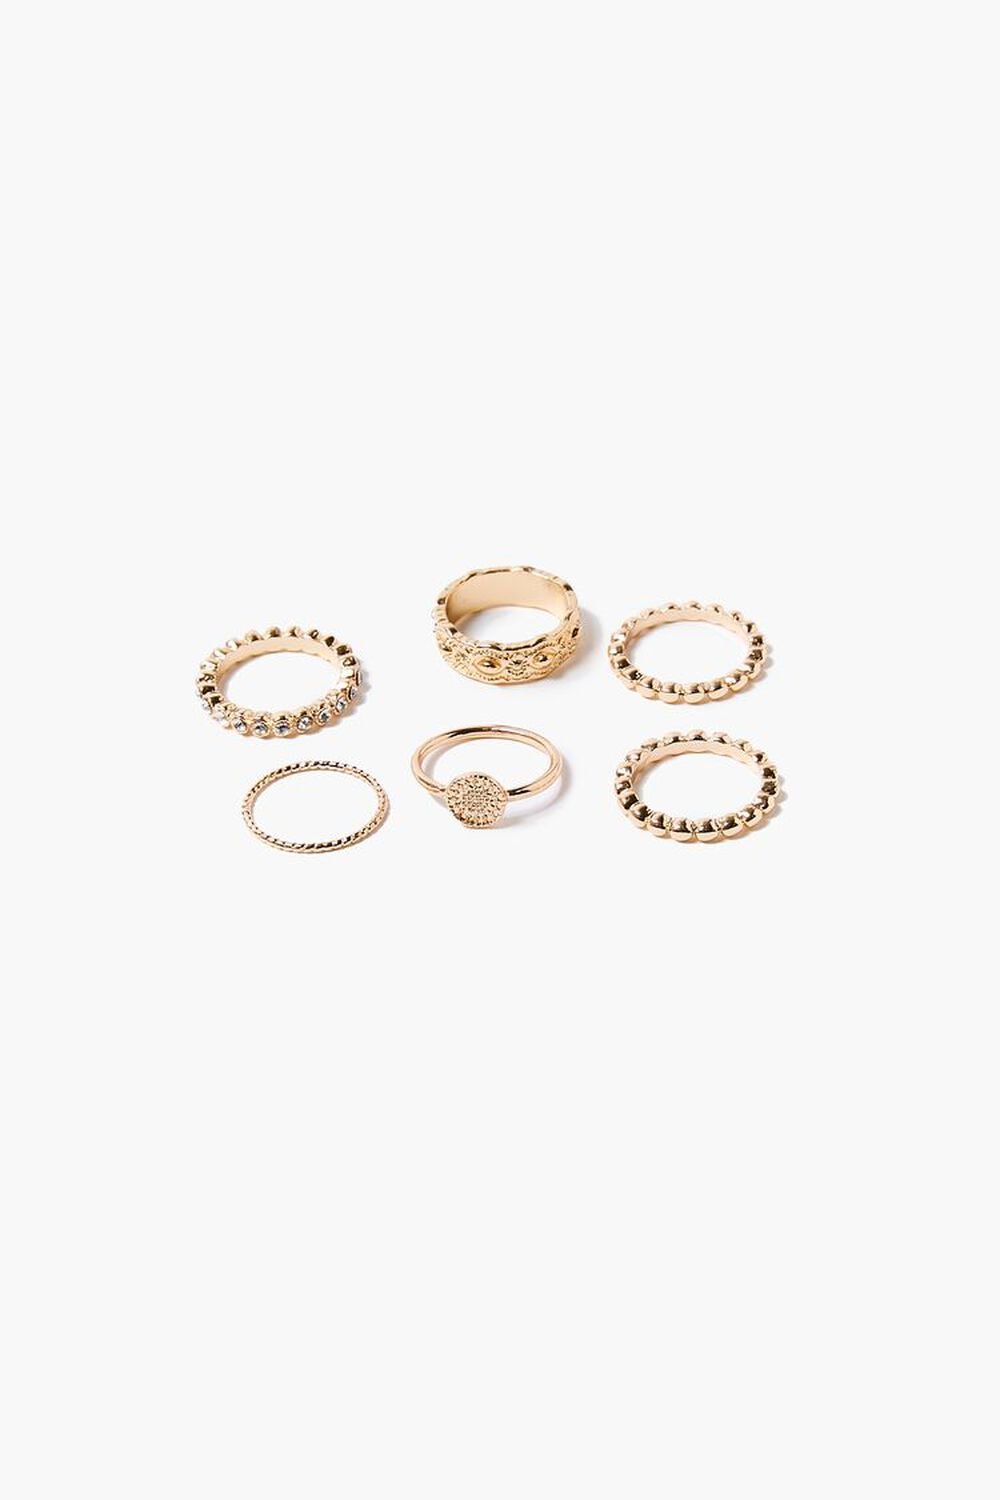 GOLD Textured Ring Set, image 1